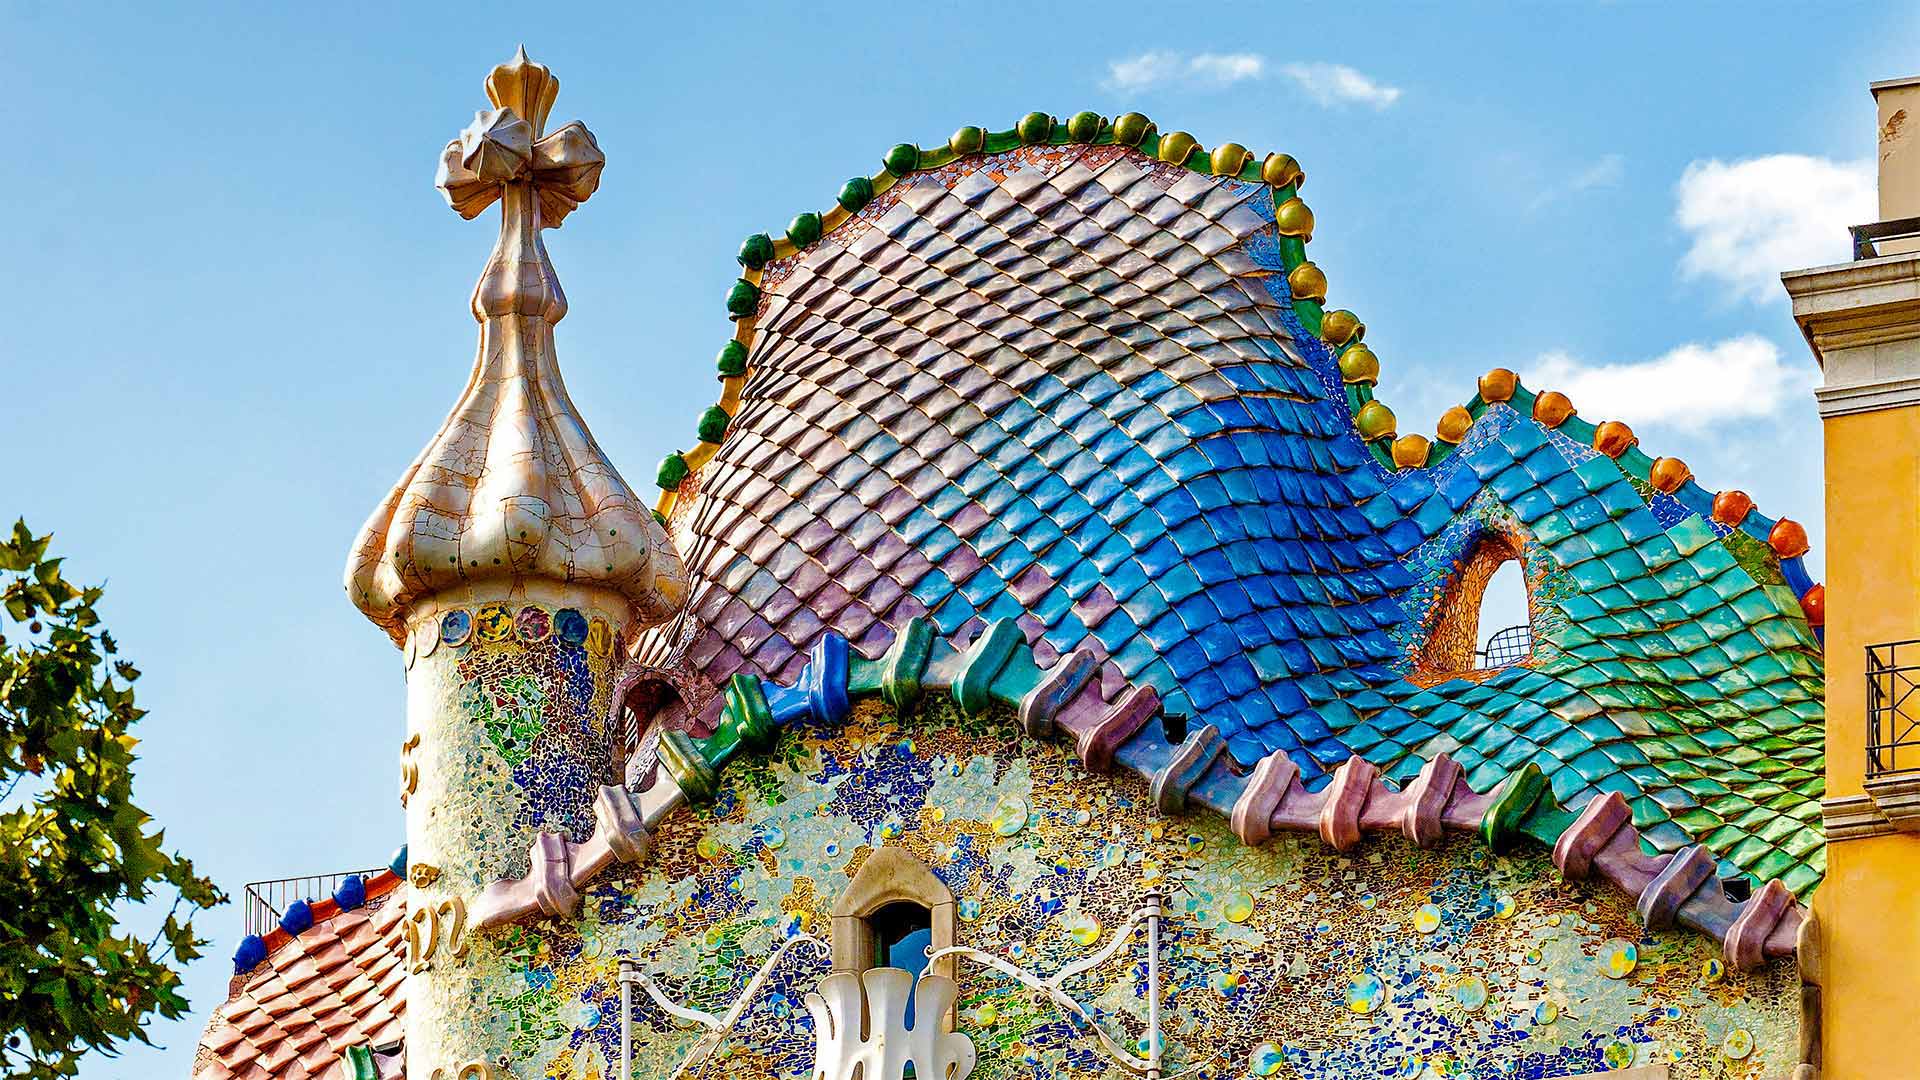 Casa Batlló in Barcelona, Catalonia, Spain - Marco Arduino/Sime/eStock Photo)